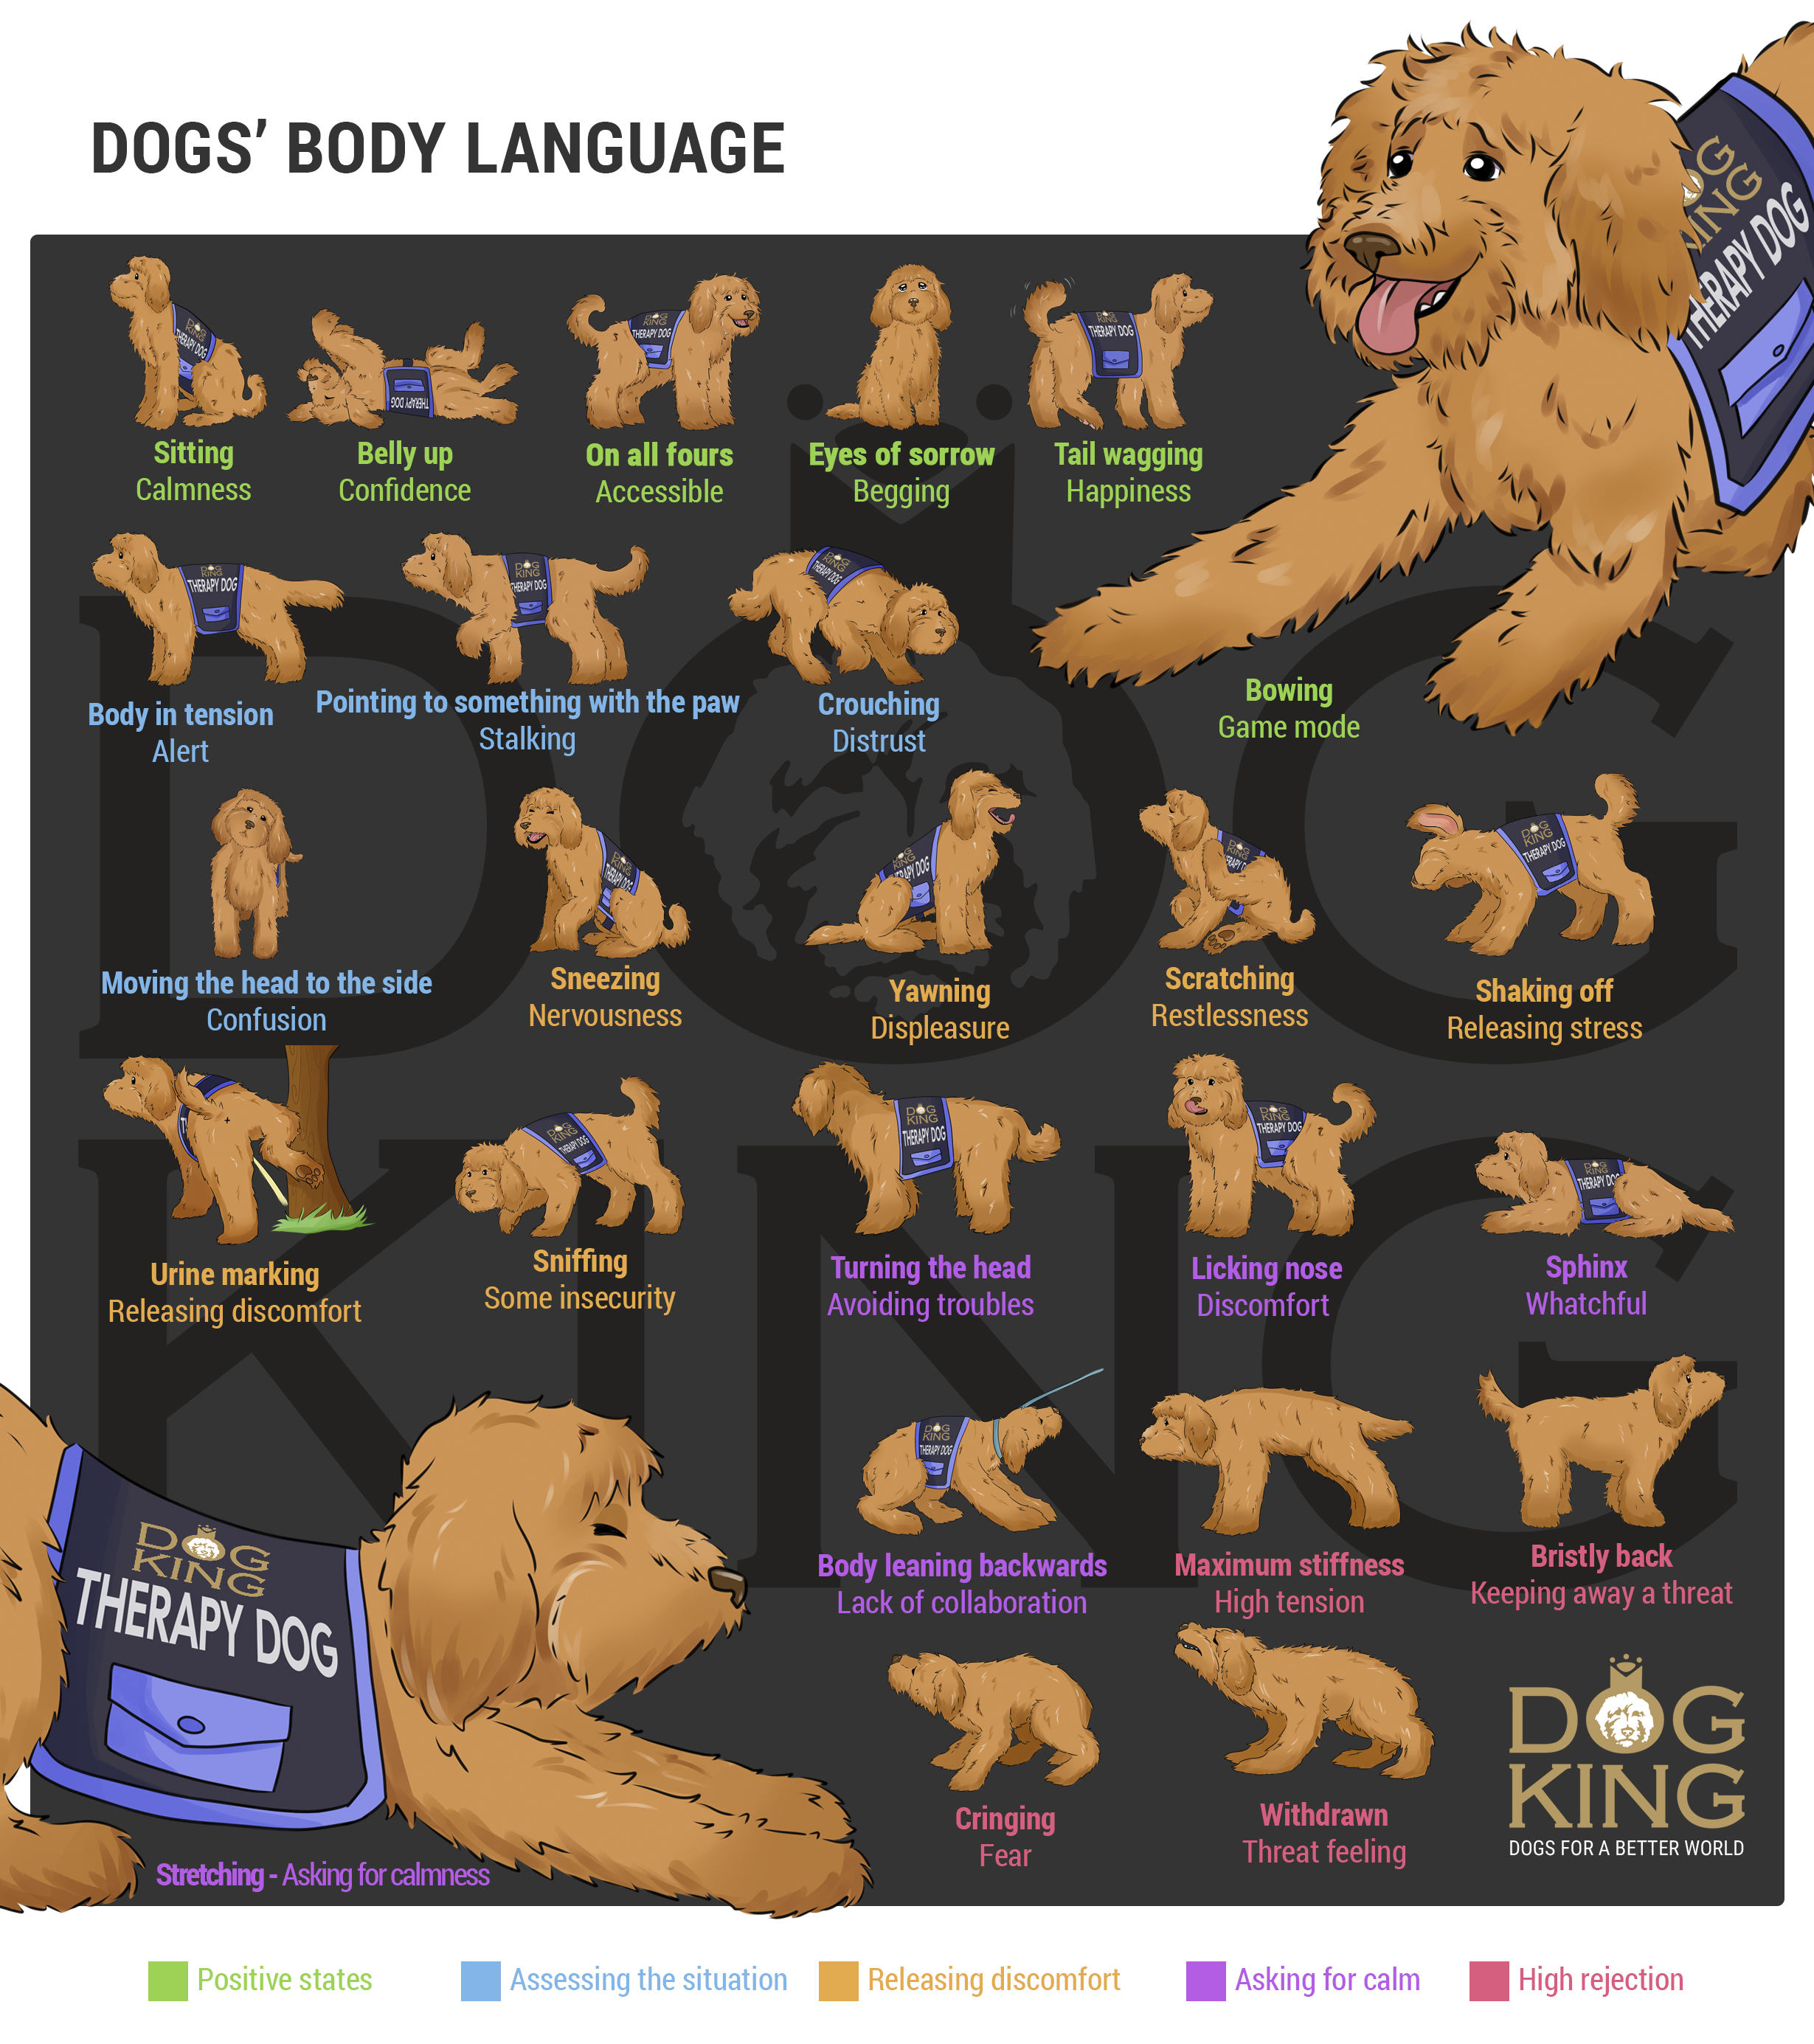 https://www.cobberdogking.com/blog/articles/images/140/dog-body-languaje-collection-ingles-3.jpg